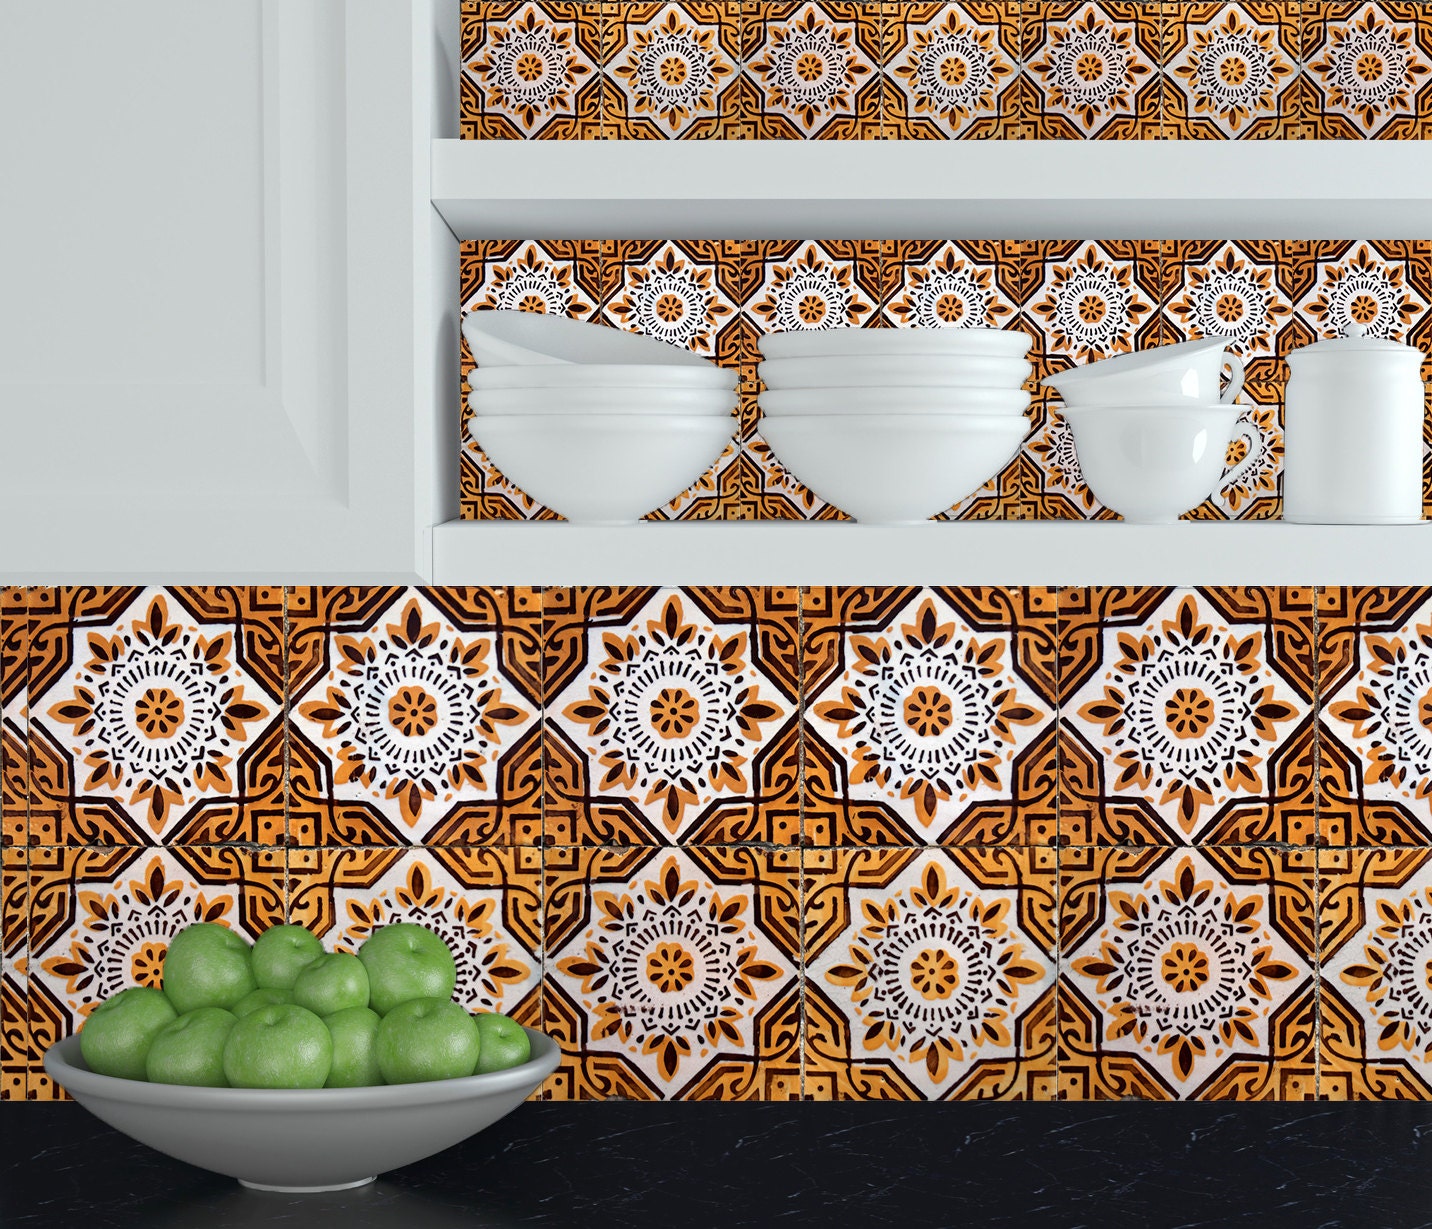 24 PC Set Kitchen Tile Decals Spanish Mexican Sticker Patters Bathroom Decor H2 